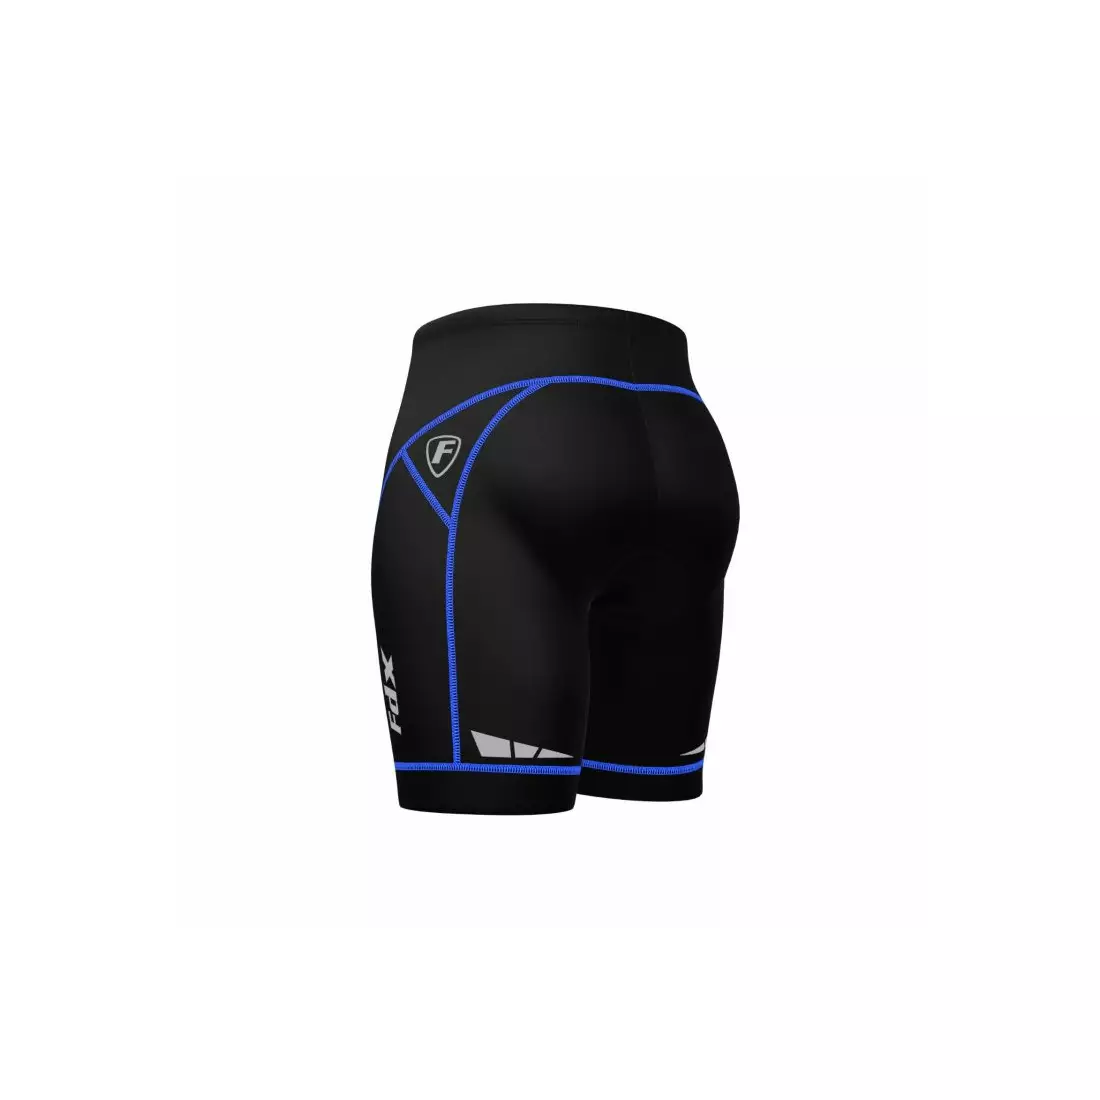 FDX 990 men's bibless cycling shorts, black and blue